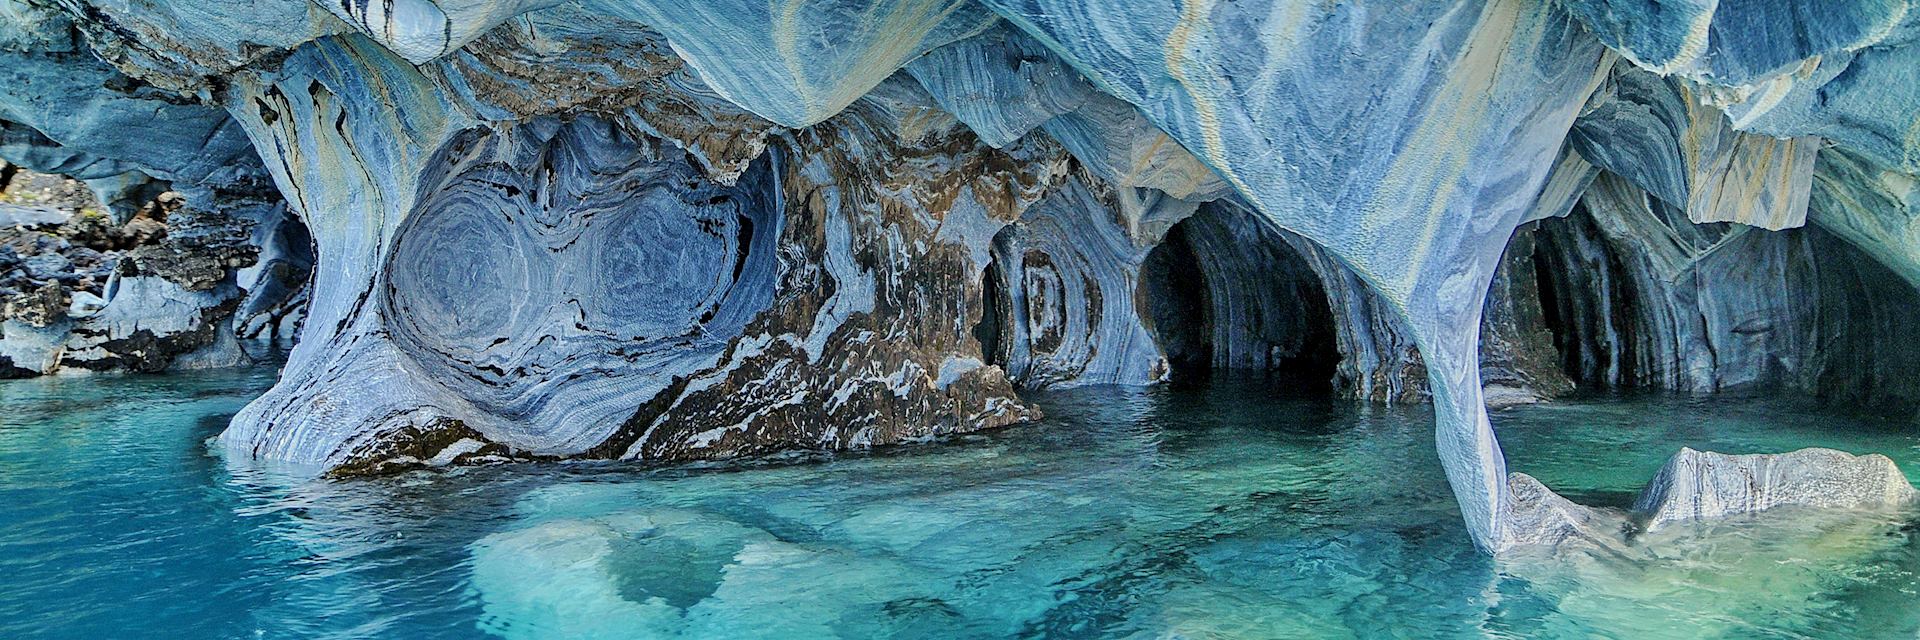 Marble caves on General Carrera Lake, Patagonia